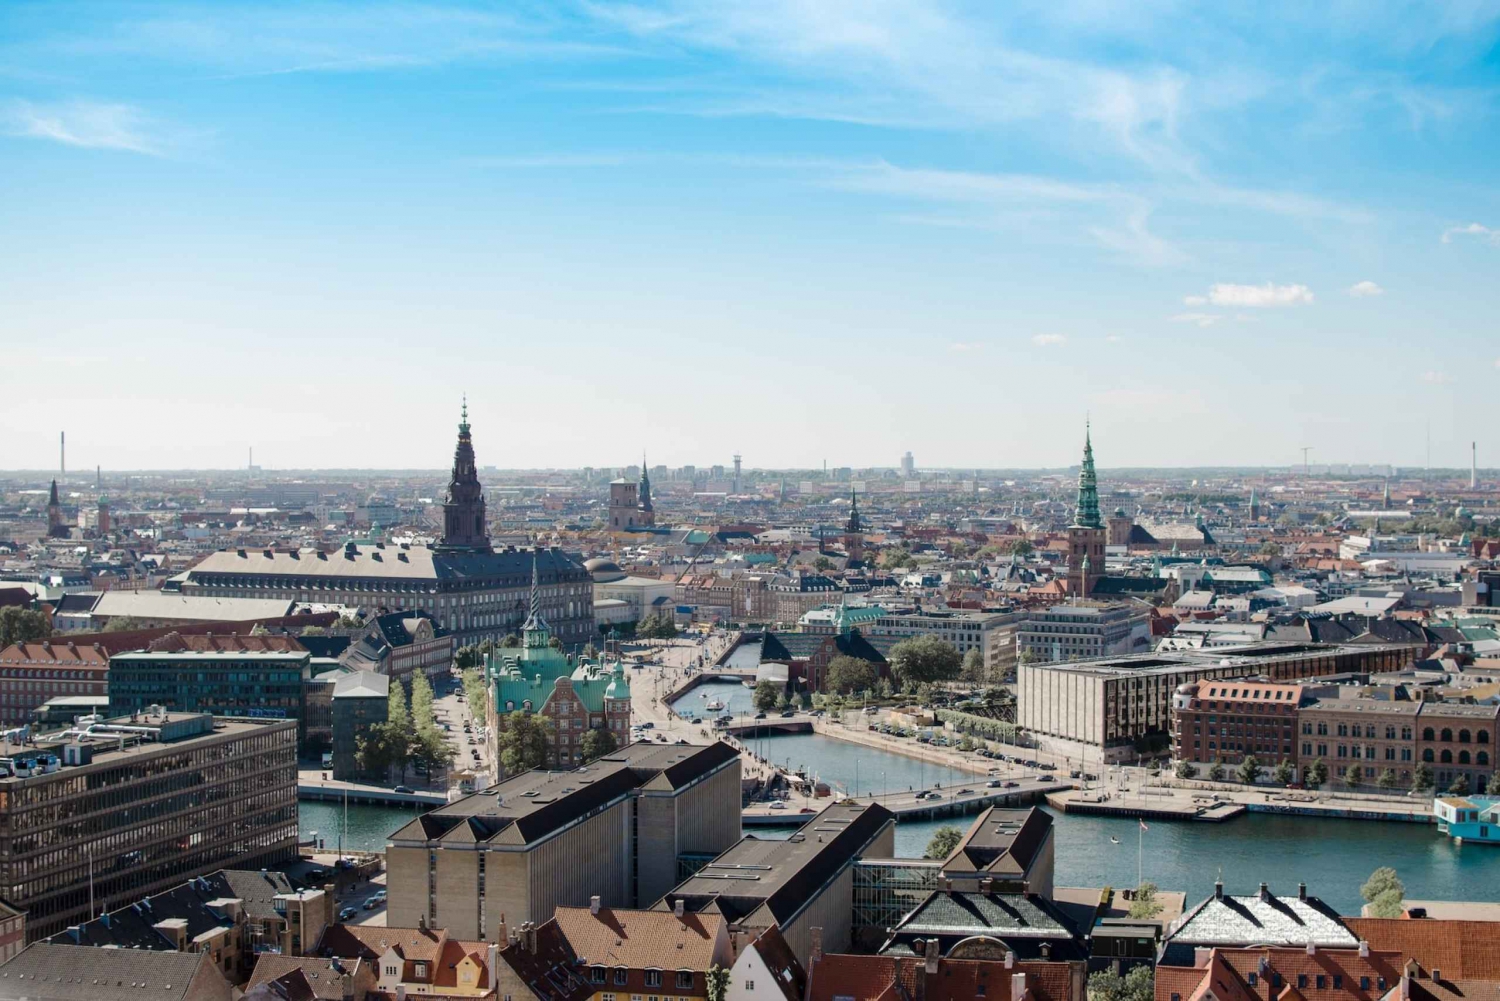 Copenhagen: Sherlock Holmes Self-guided Smartphone City Game